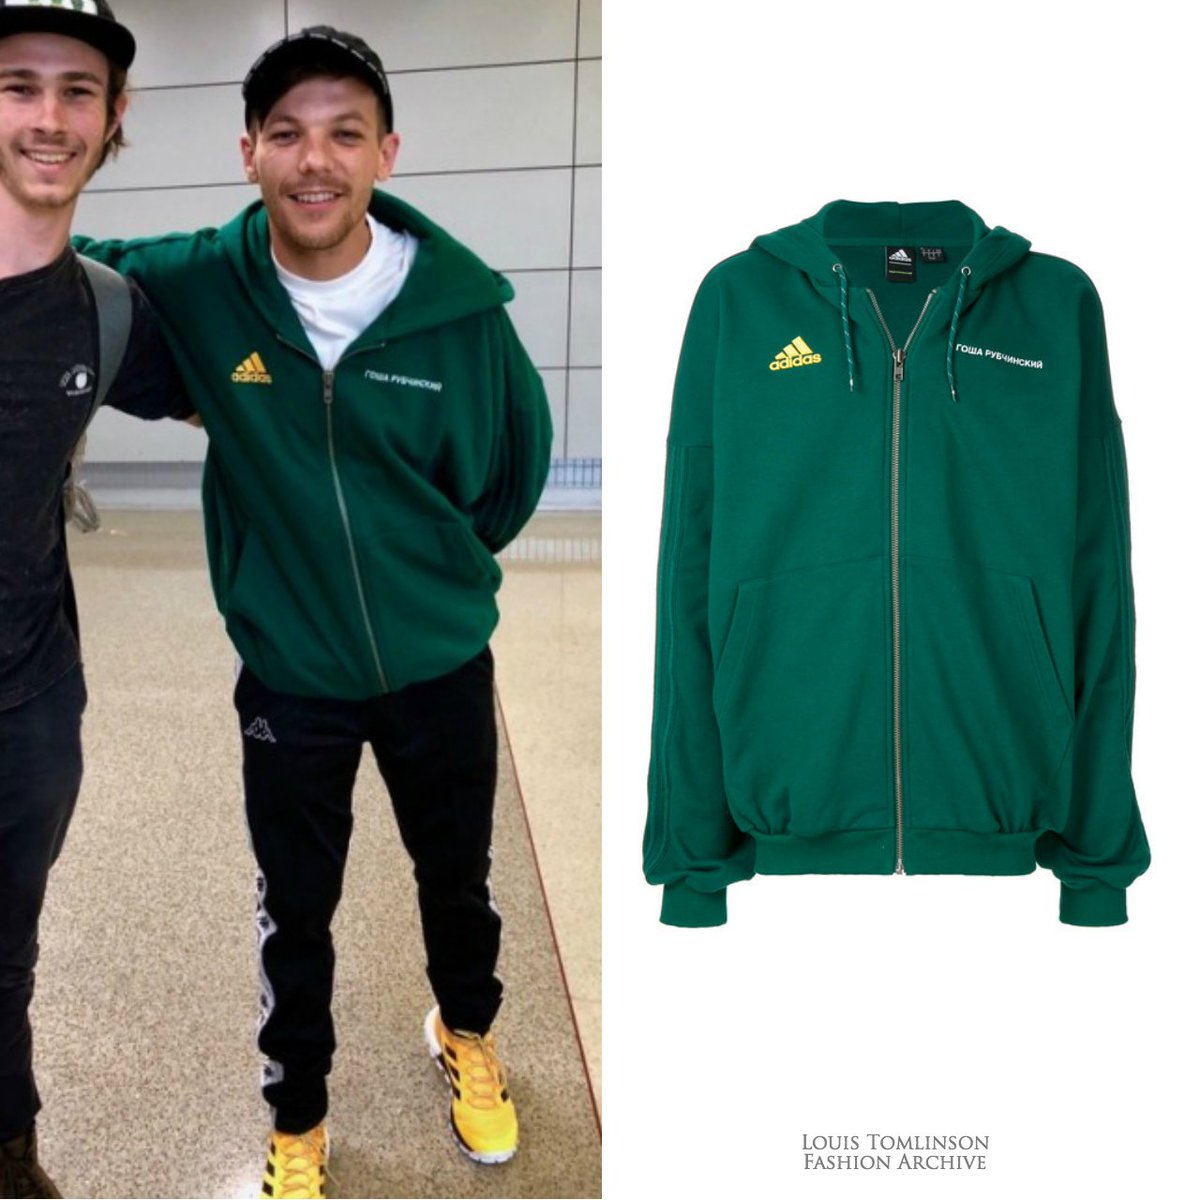 louis tomlinson green adidas hoodie where to buy